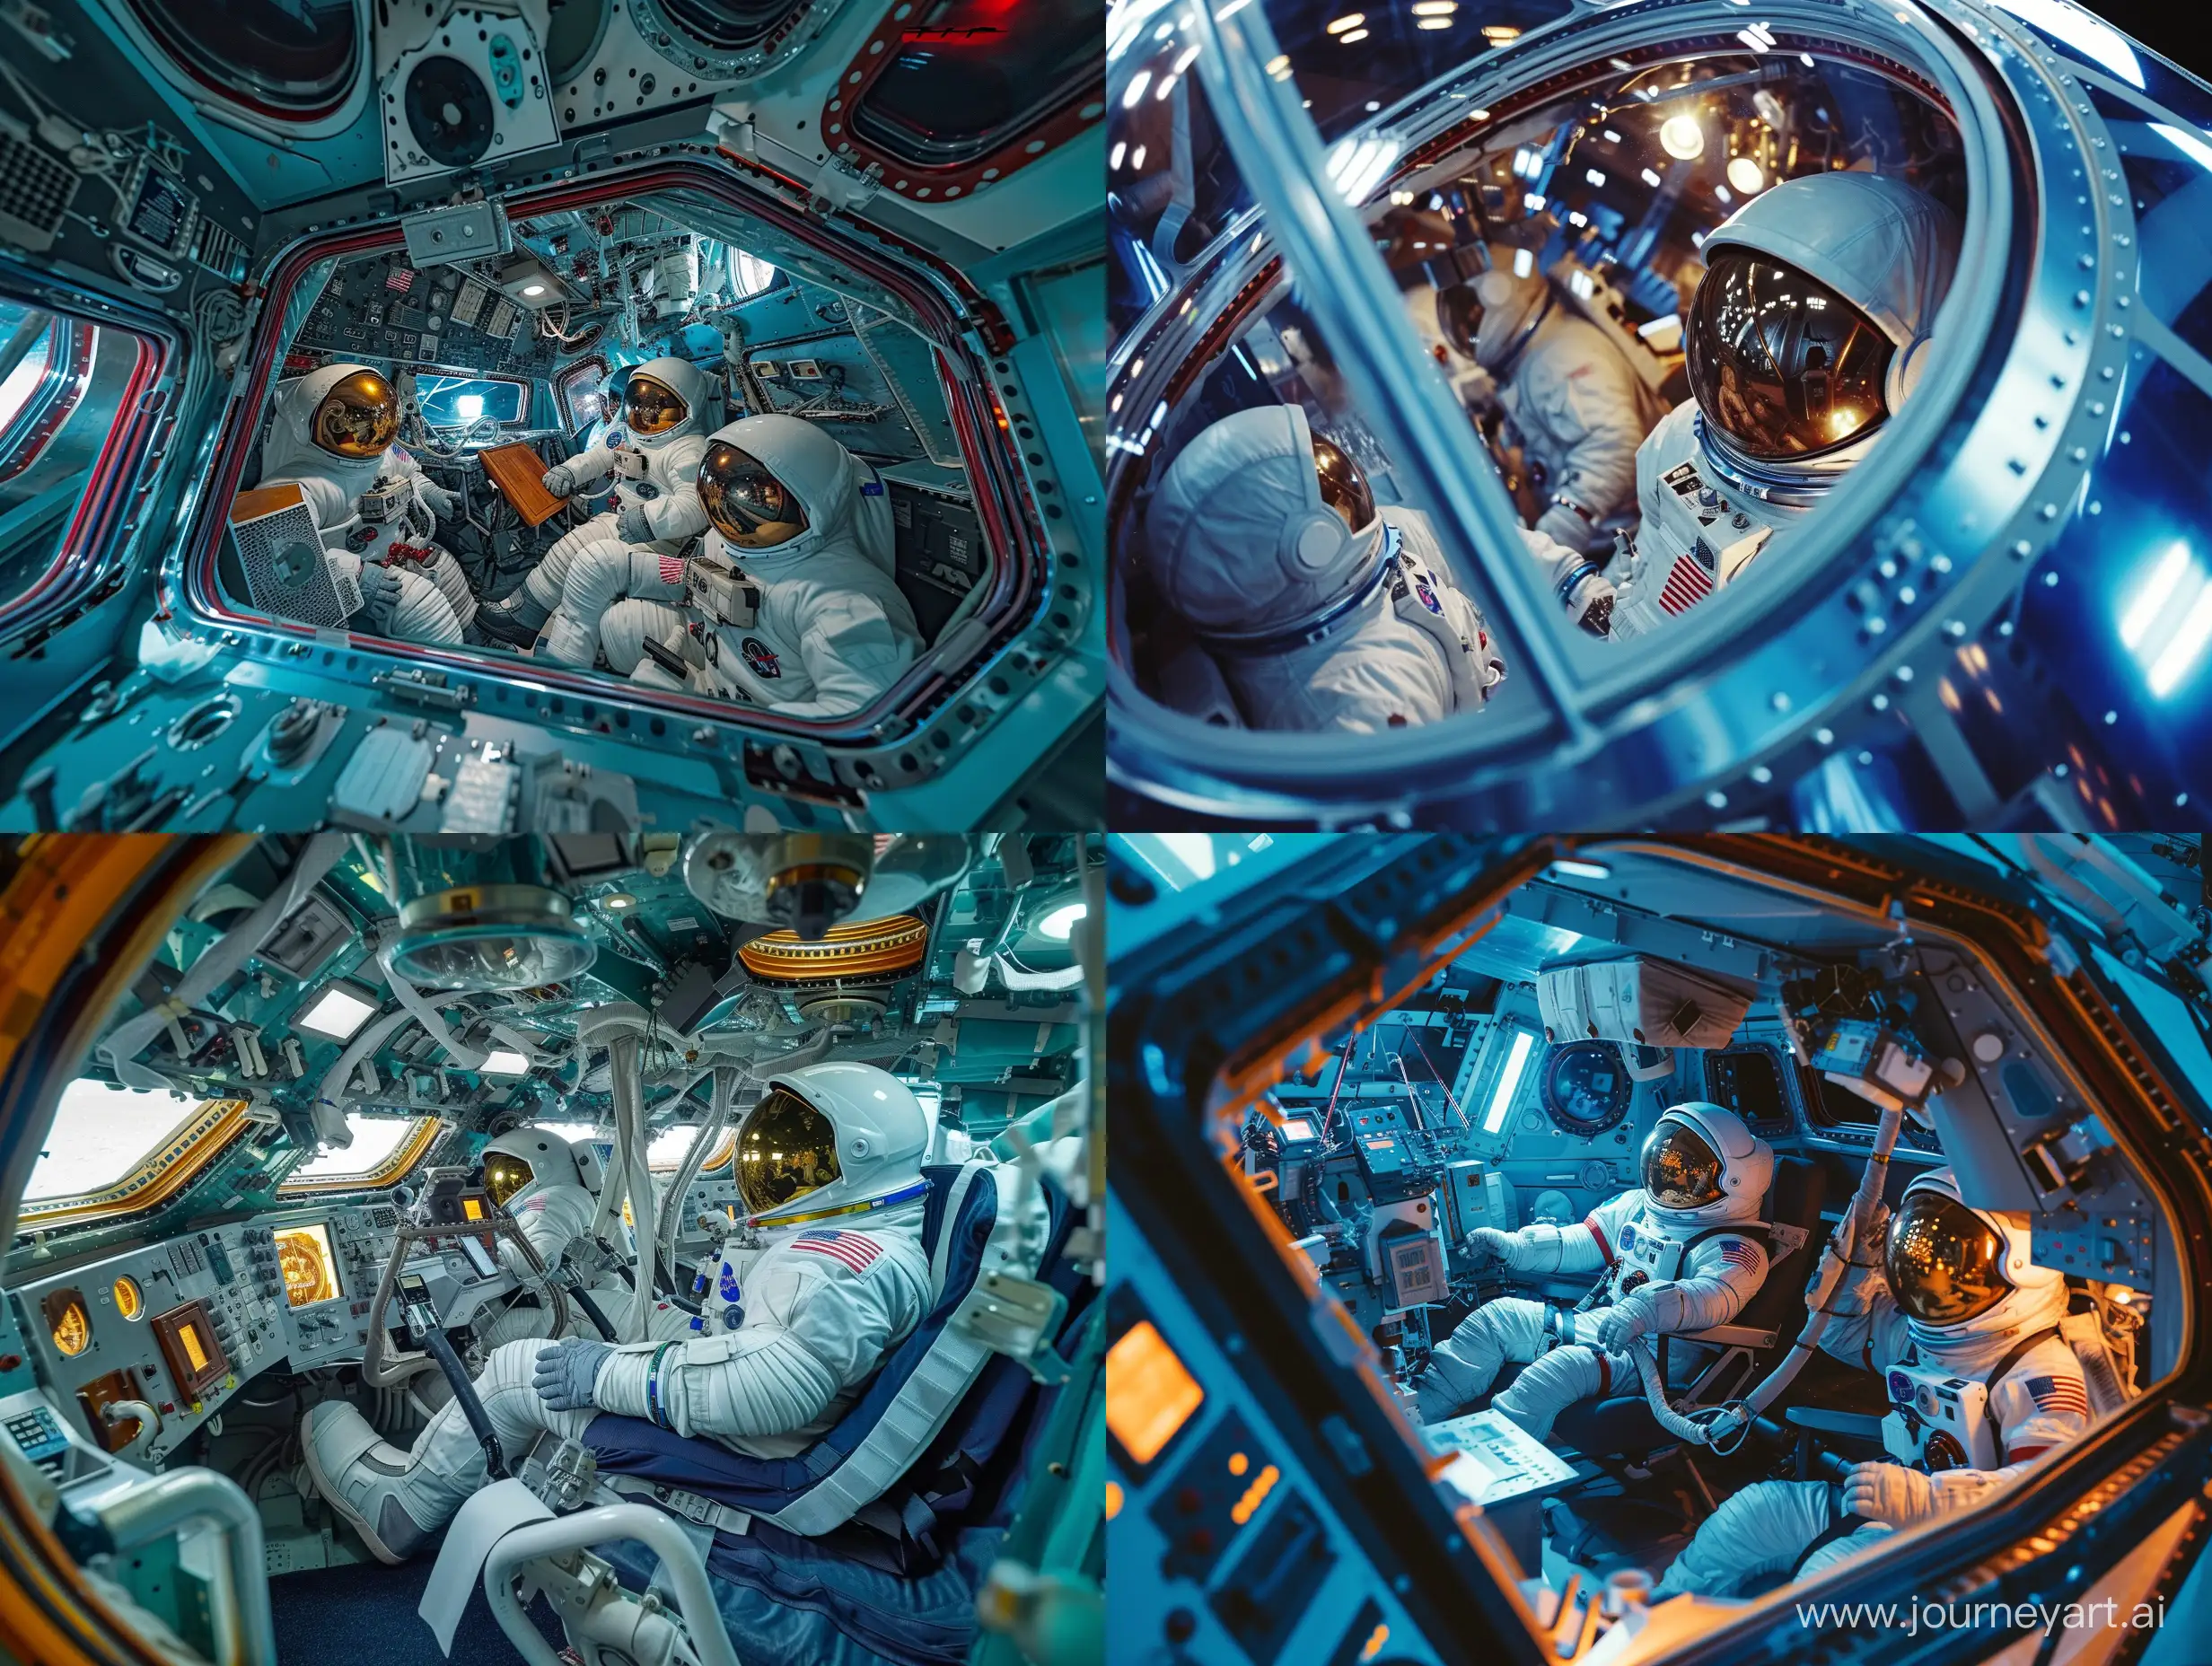 Astronauts-in-Apollo-13-Spacecraft-Capturing-Stellar-Moments-in-Cool-Metallic-Tones